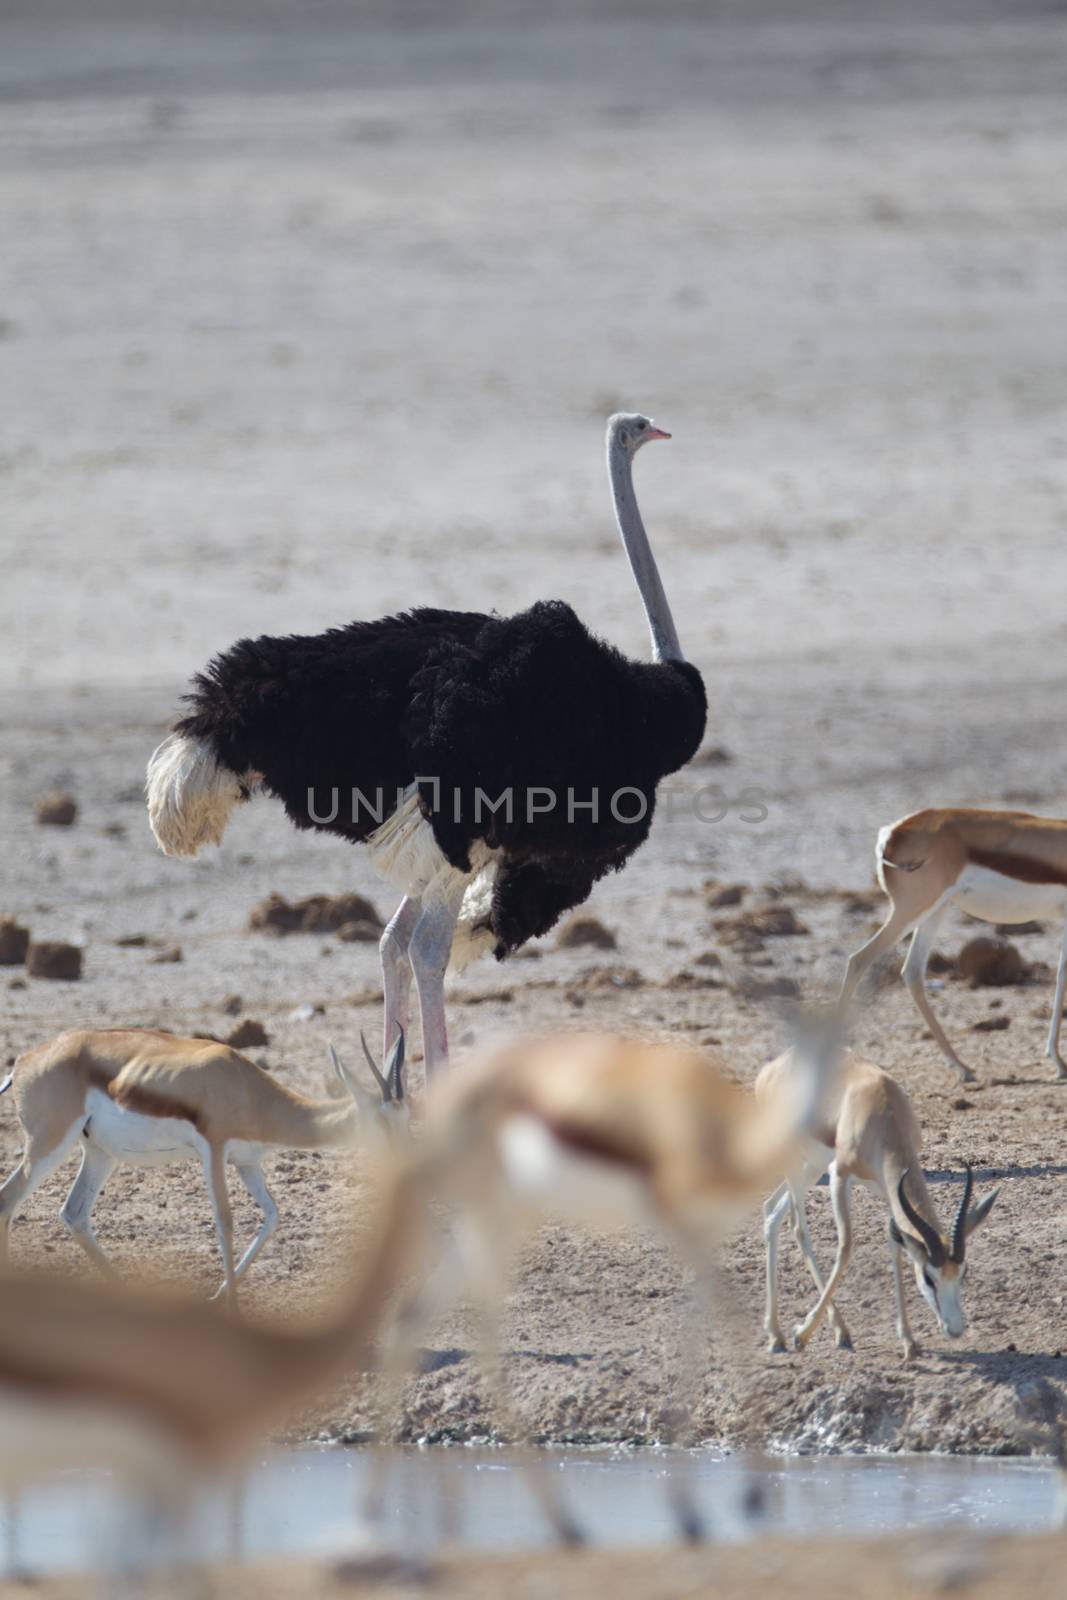 Ostrich in the wilderness by ozkanzozmen